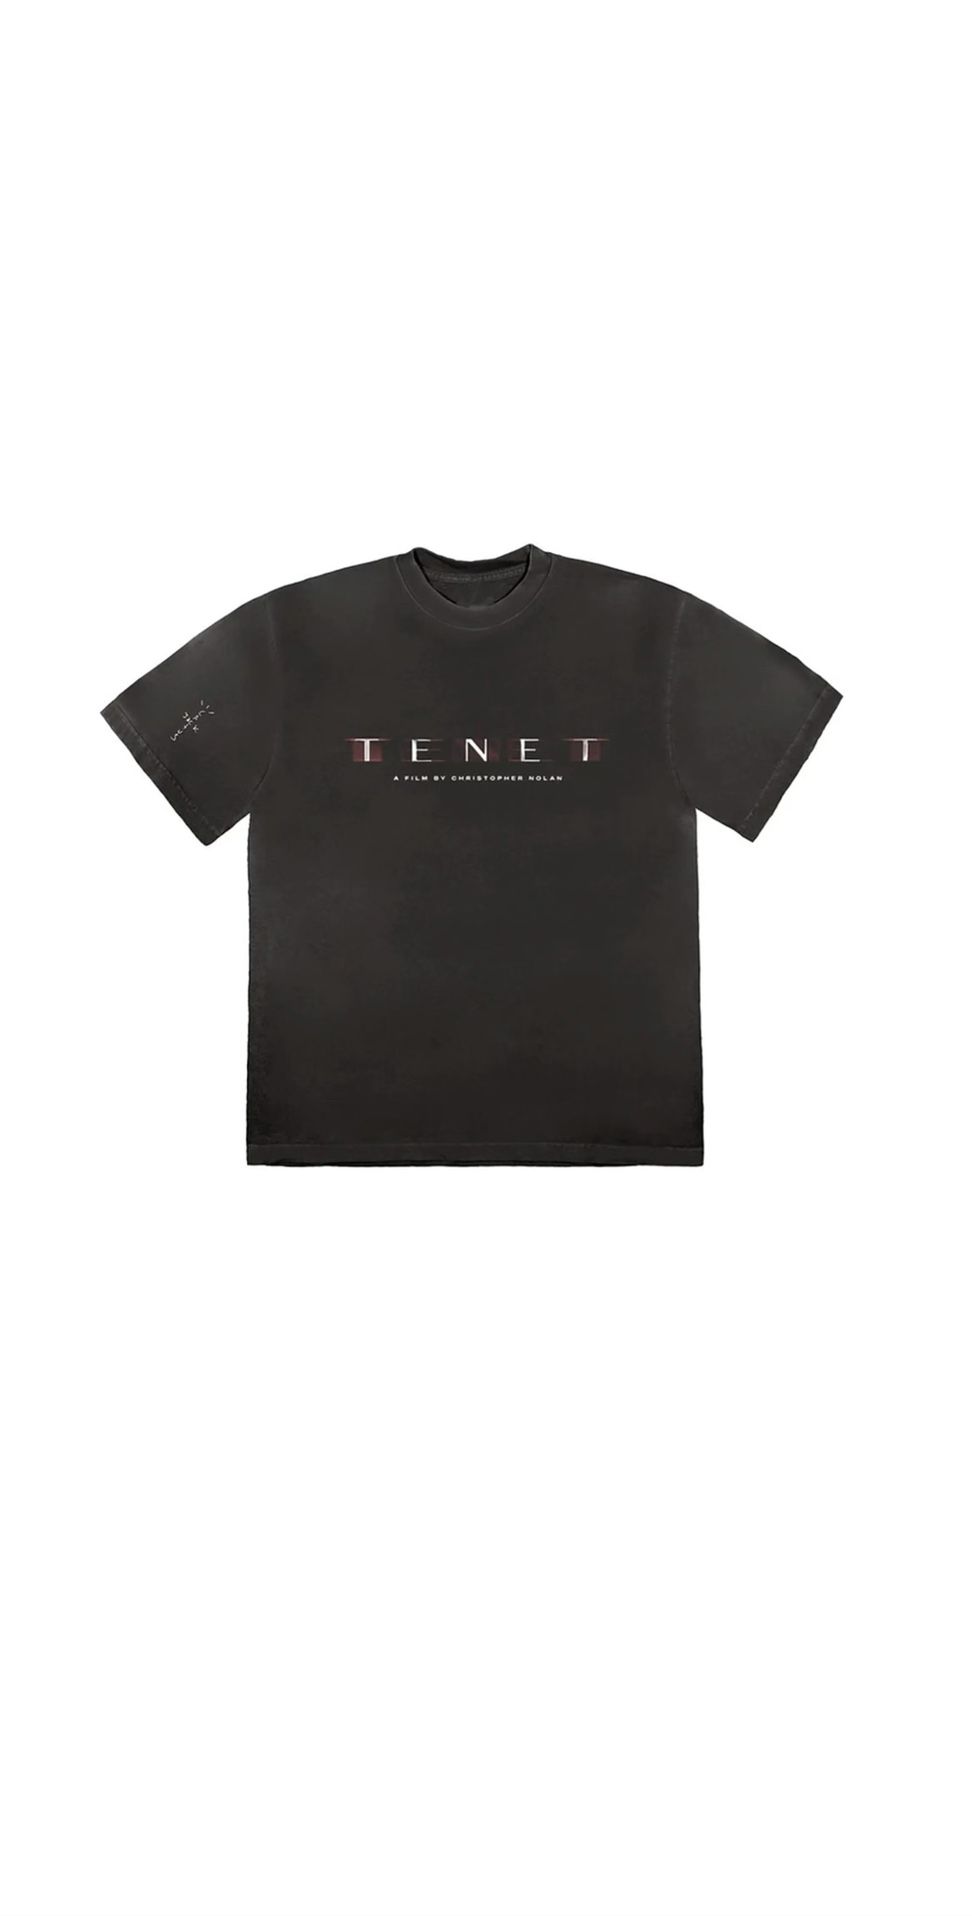 Travis Scott T-shirt Tenet Size Large